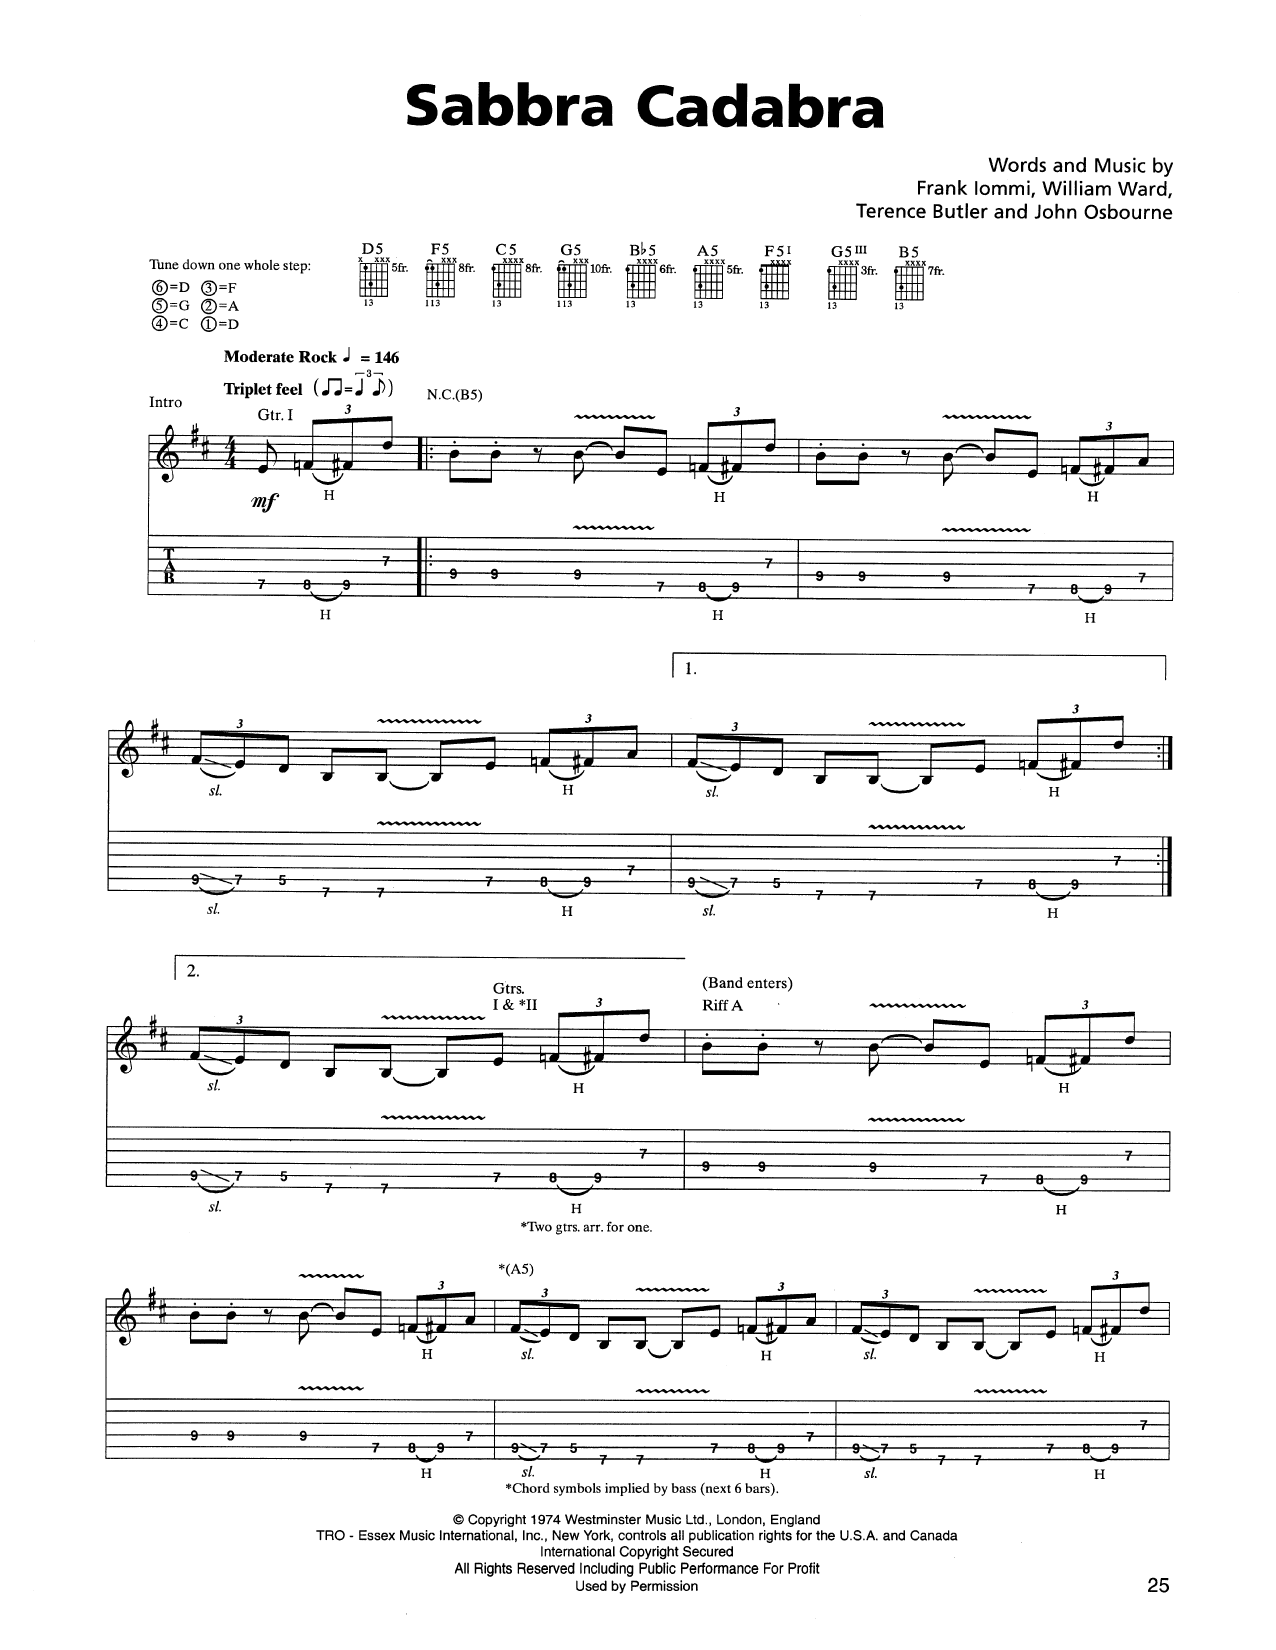 Download Metallica Sabbra Cadabra Sheet Music and learn how to play Lyrics & Chords PDF digital score in minutes